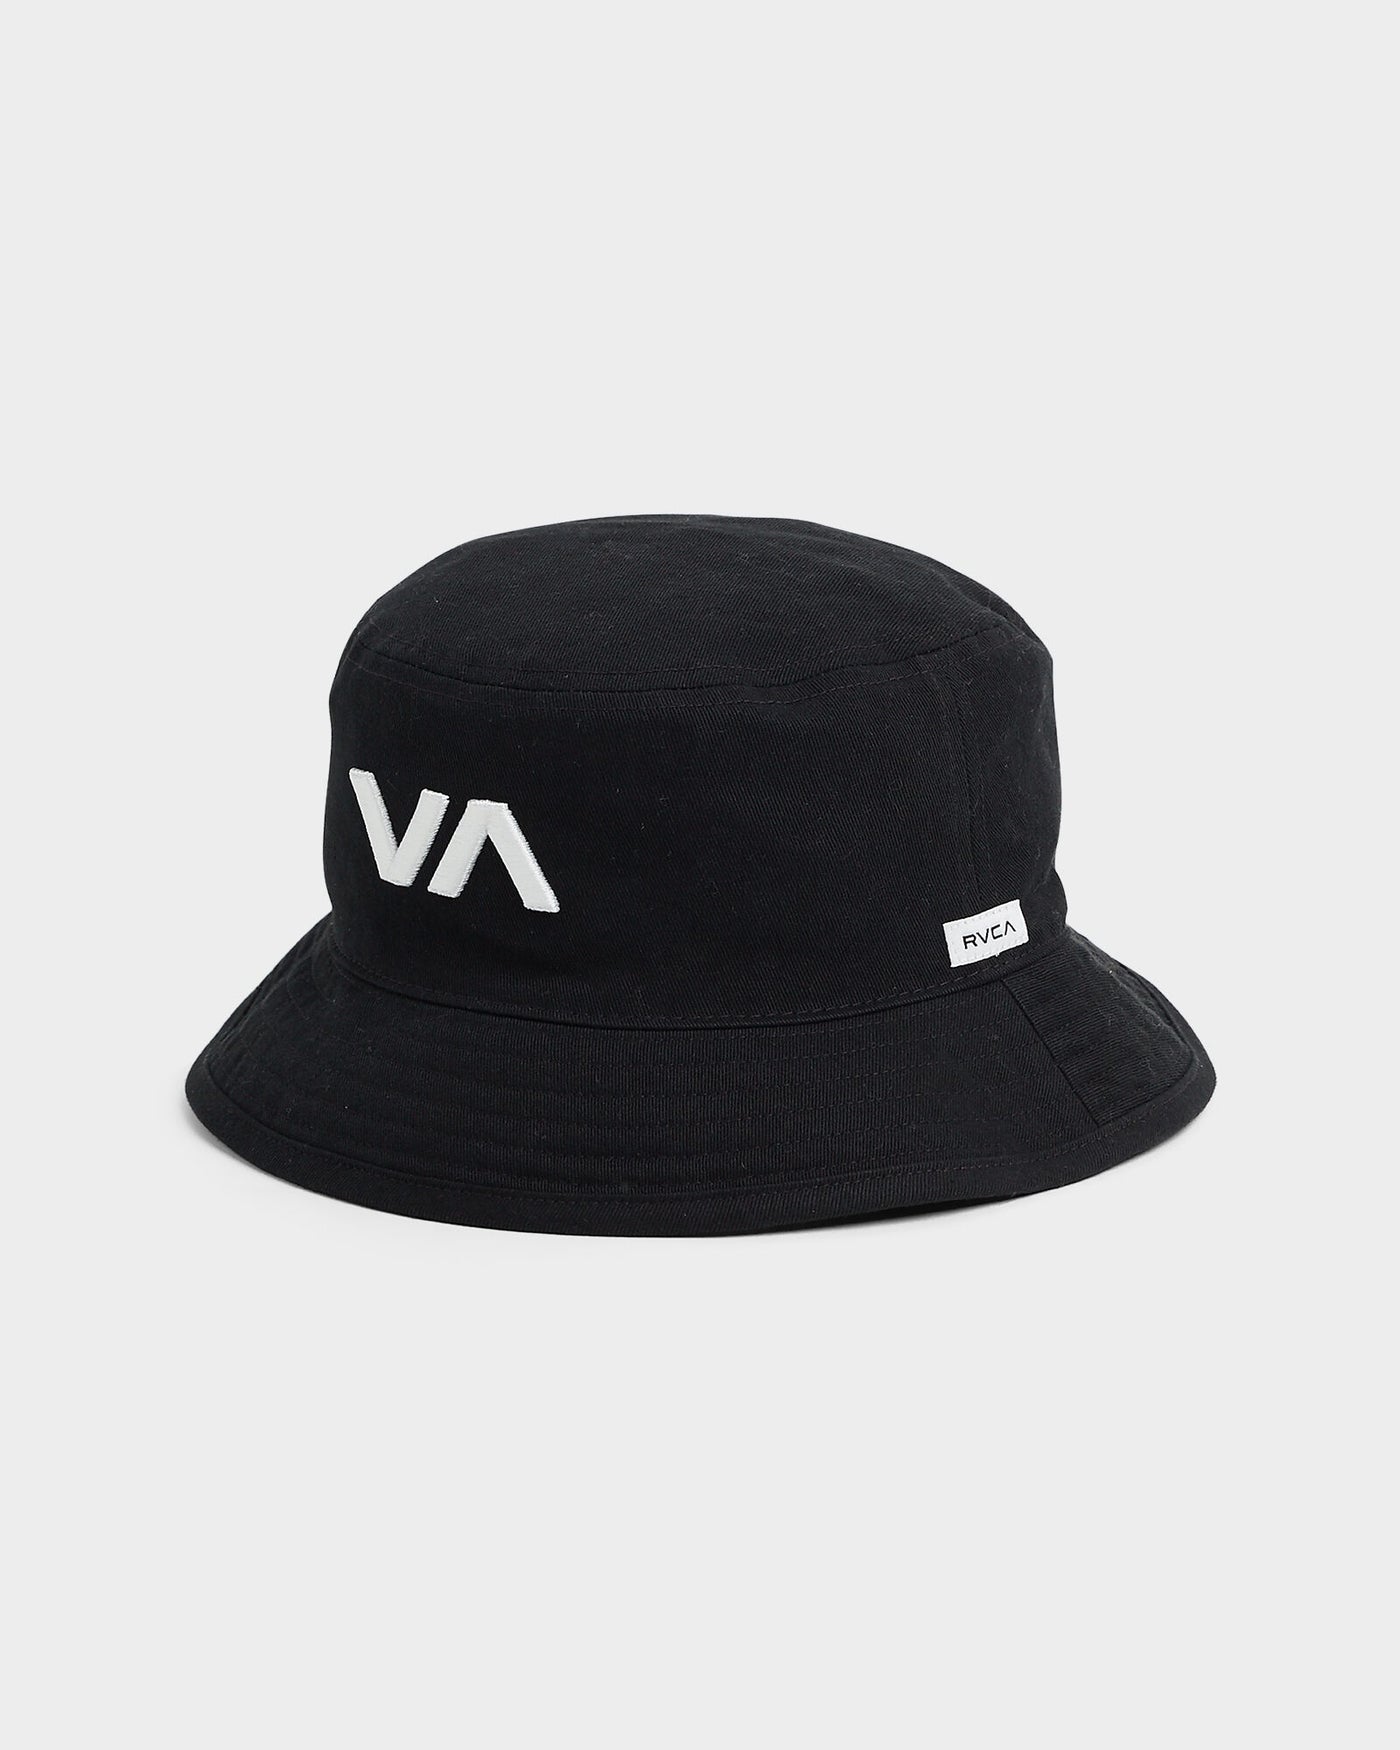 RVCA Surf Bucket Hat